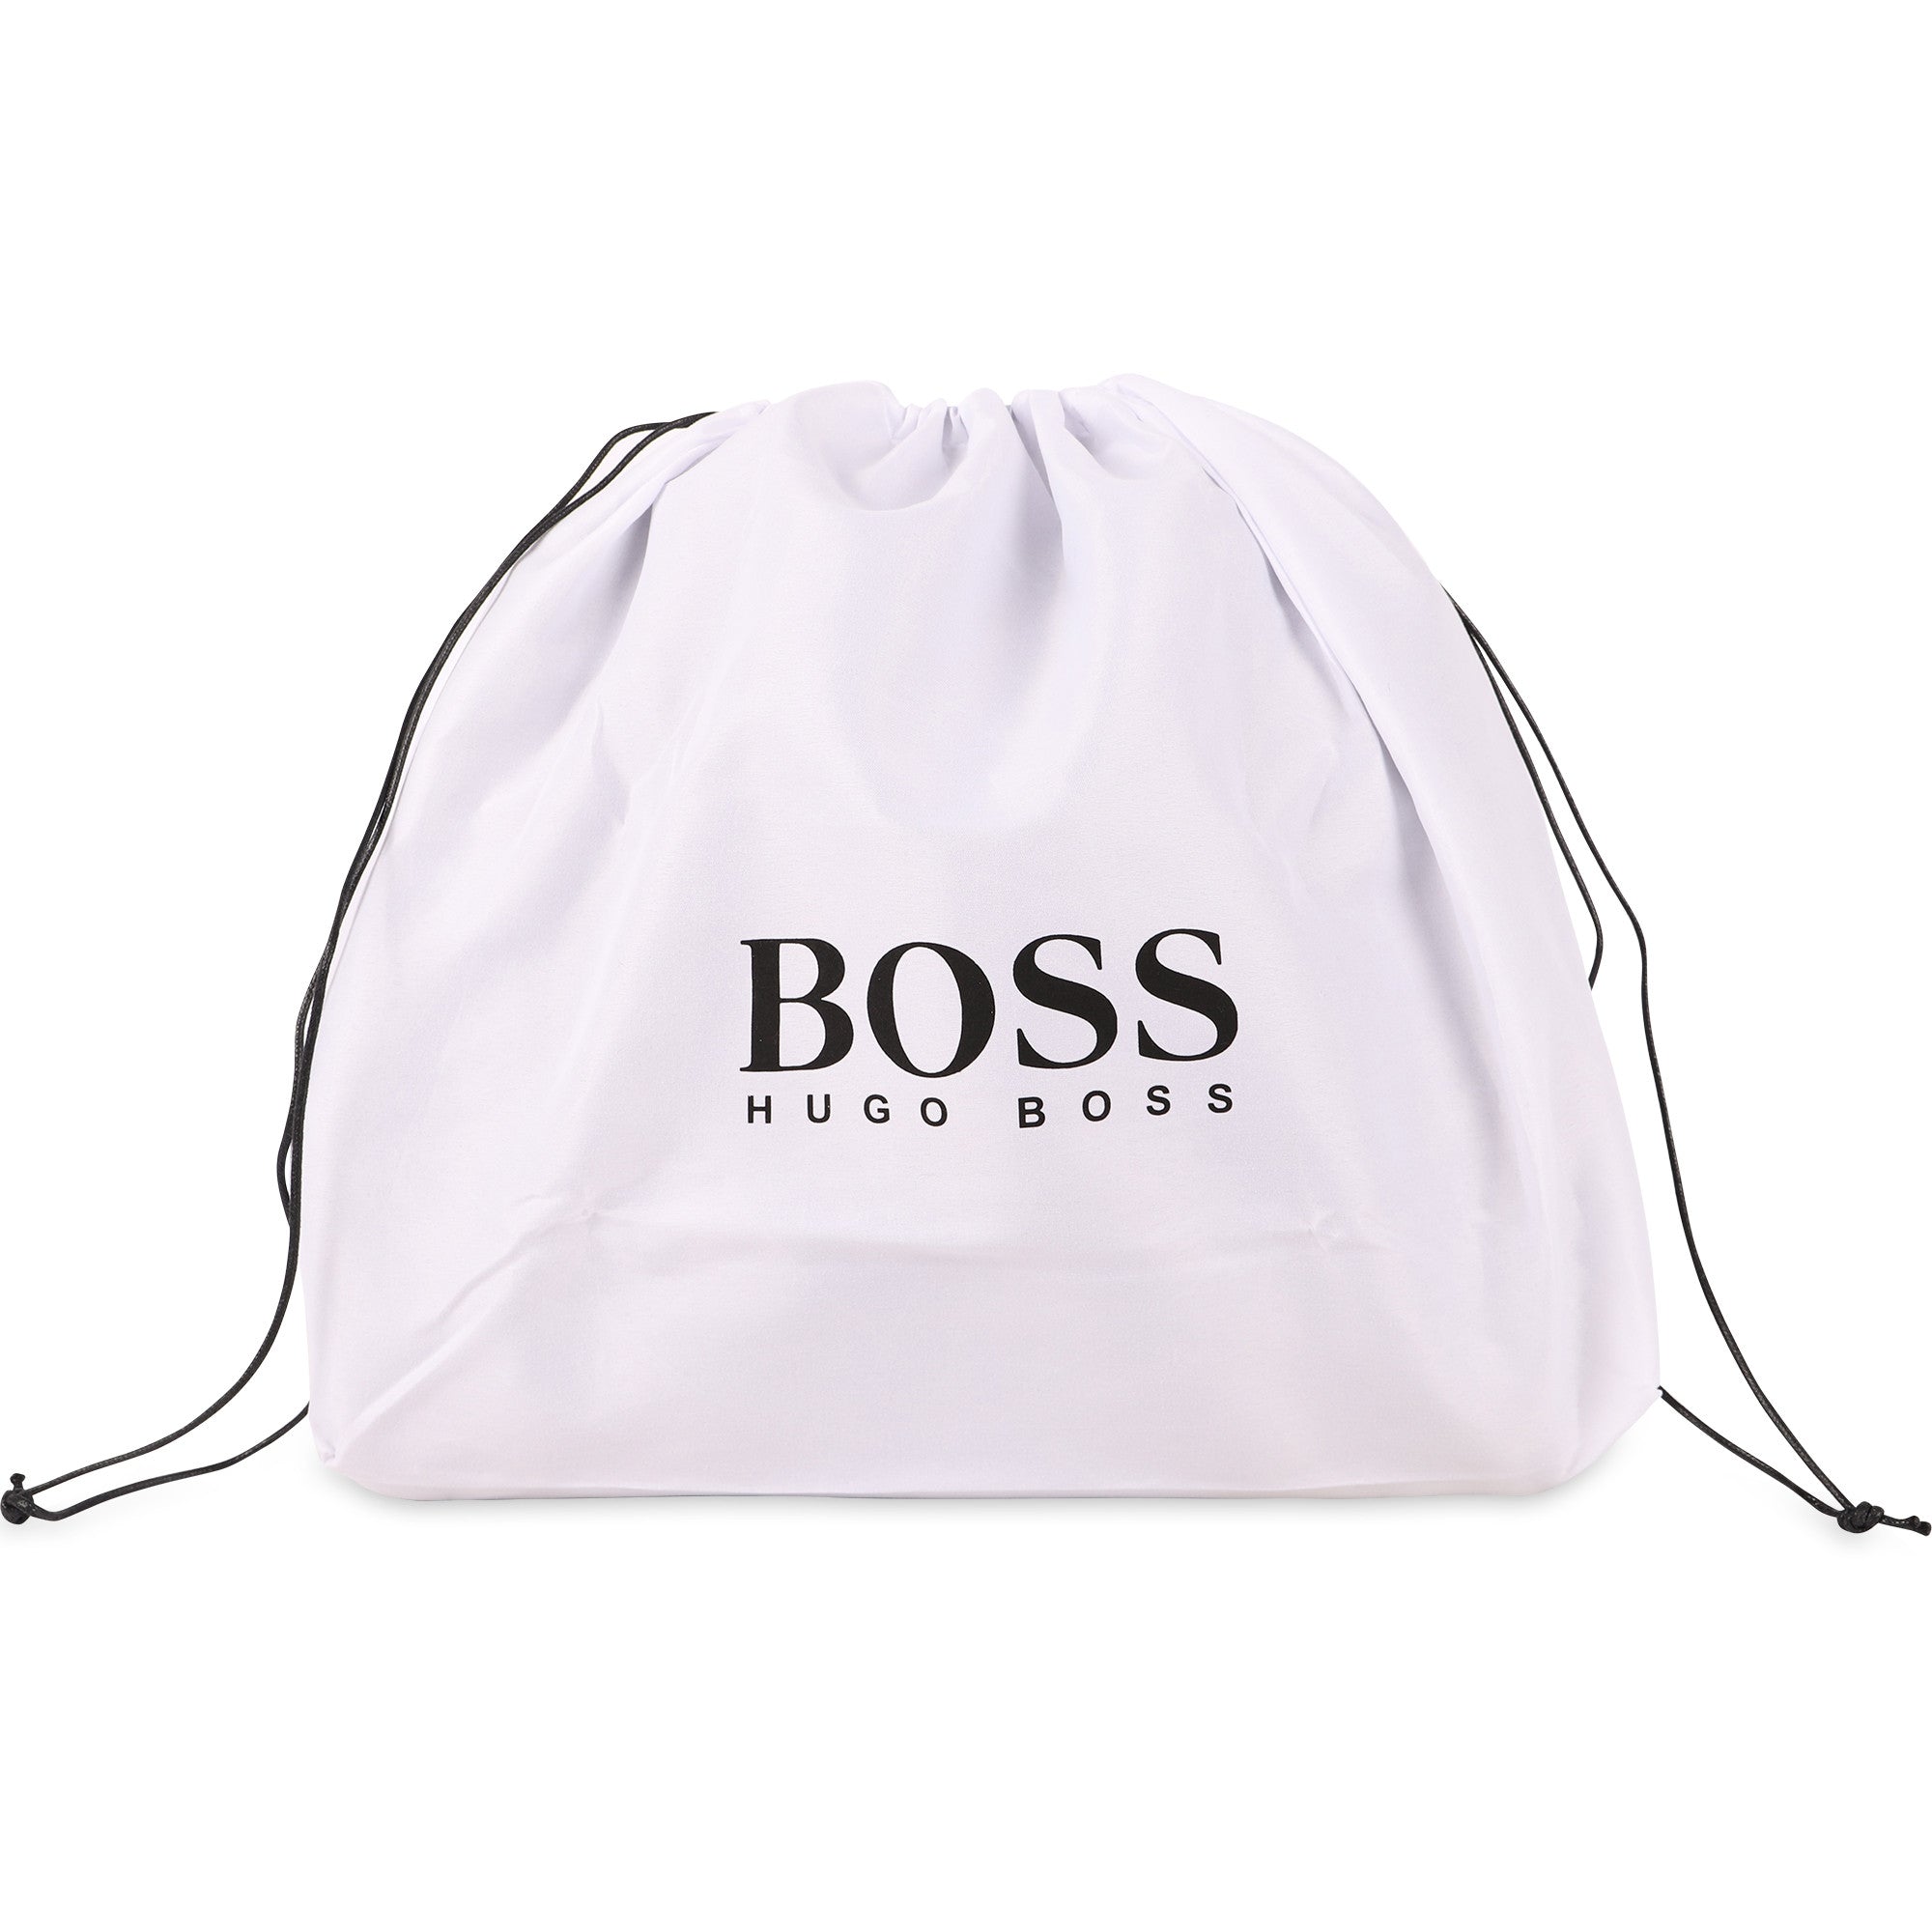 Hugo Boss Baby Changing Bag Navy